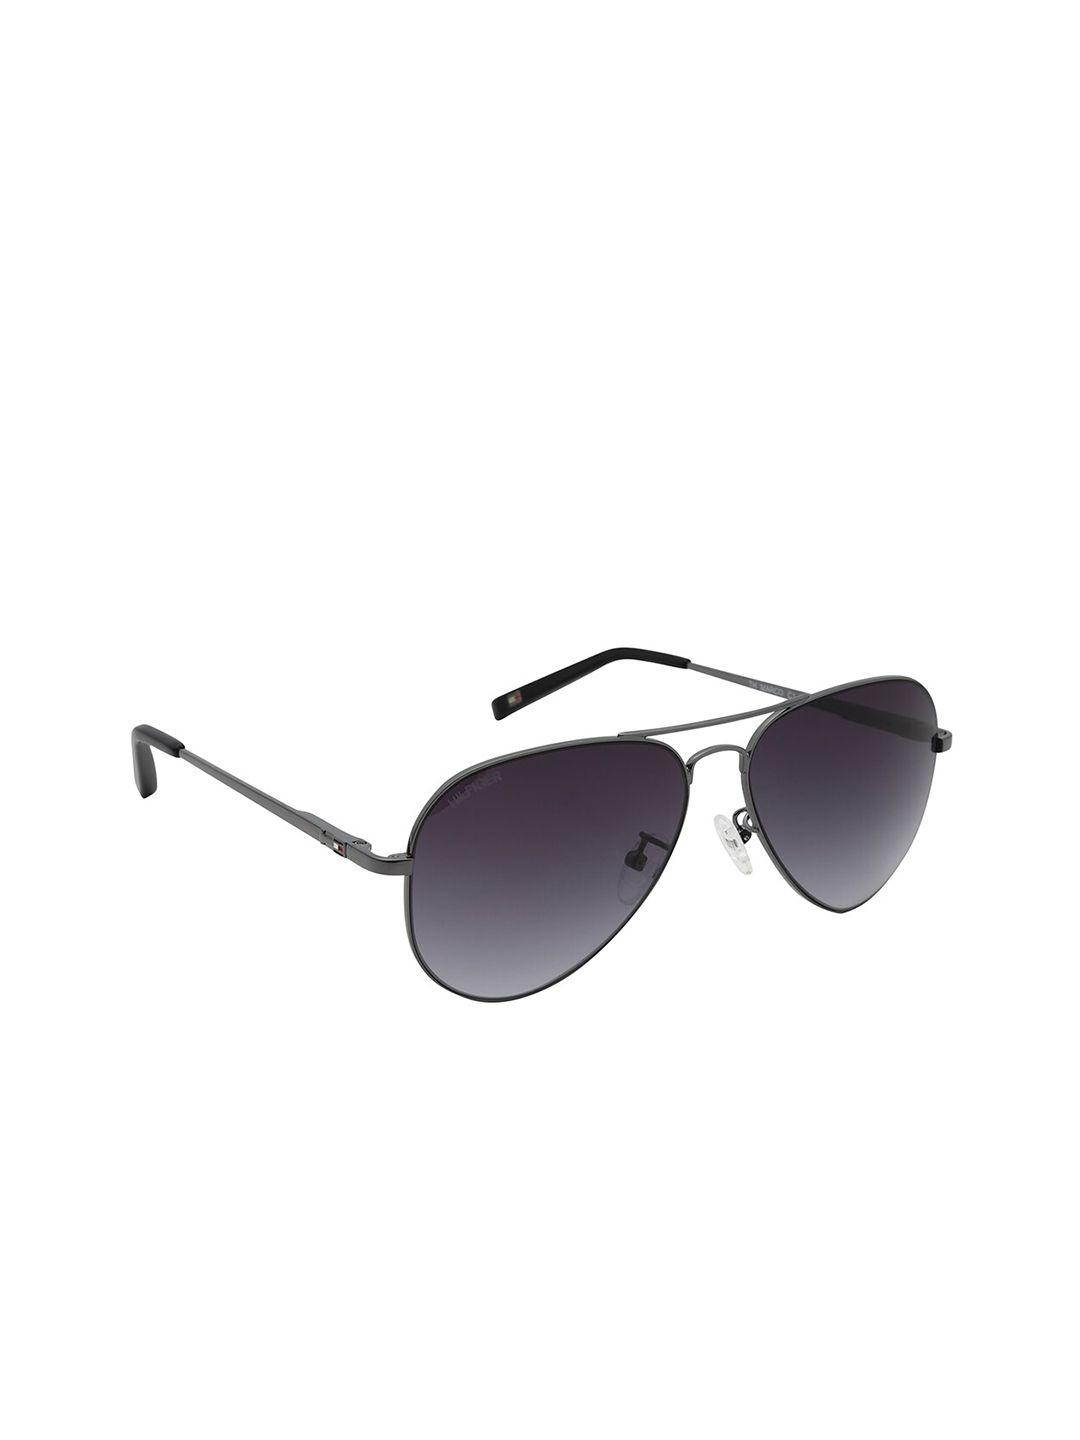 tommy hilfiger unisex grey lens & gunmetal-toned aviator sunglasses th marco c1